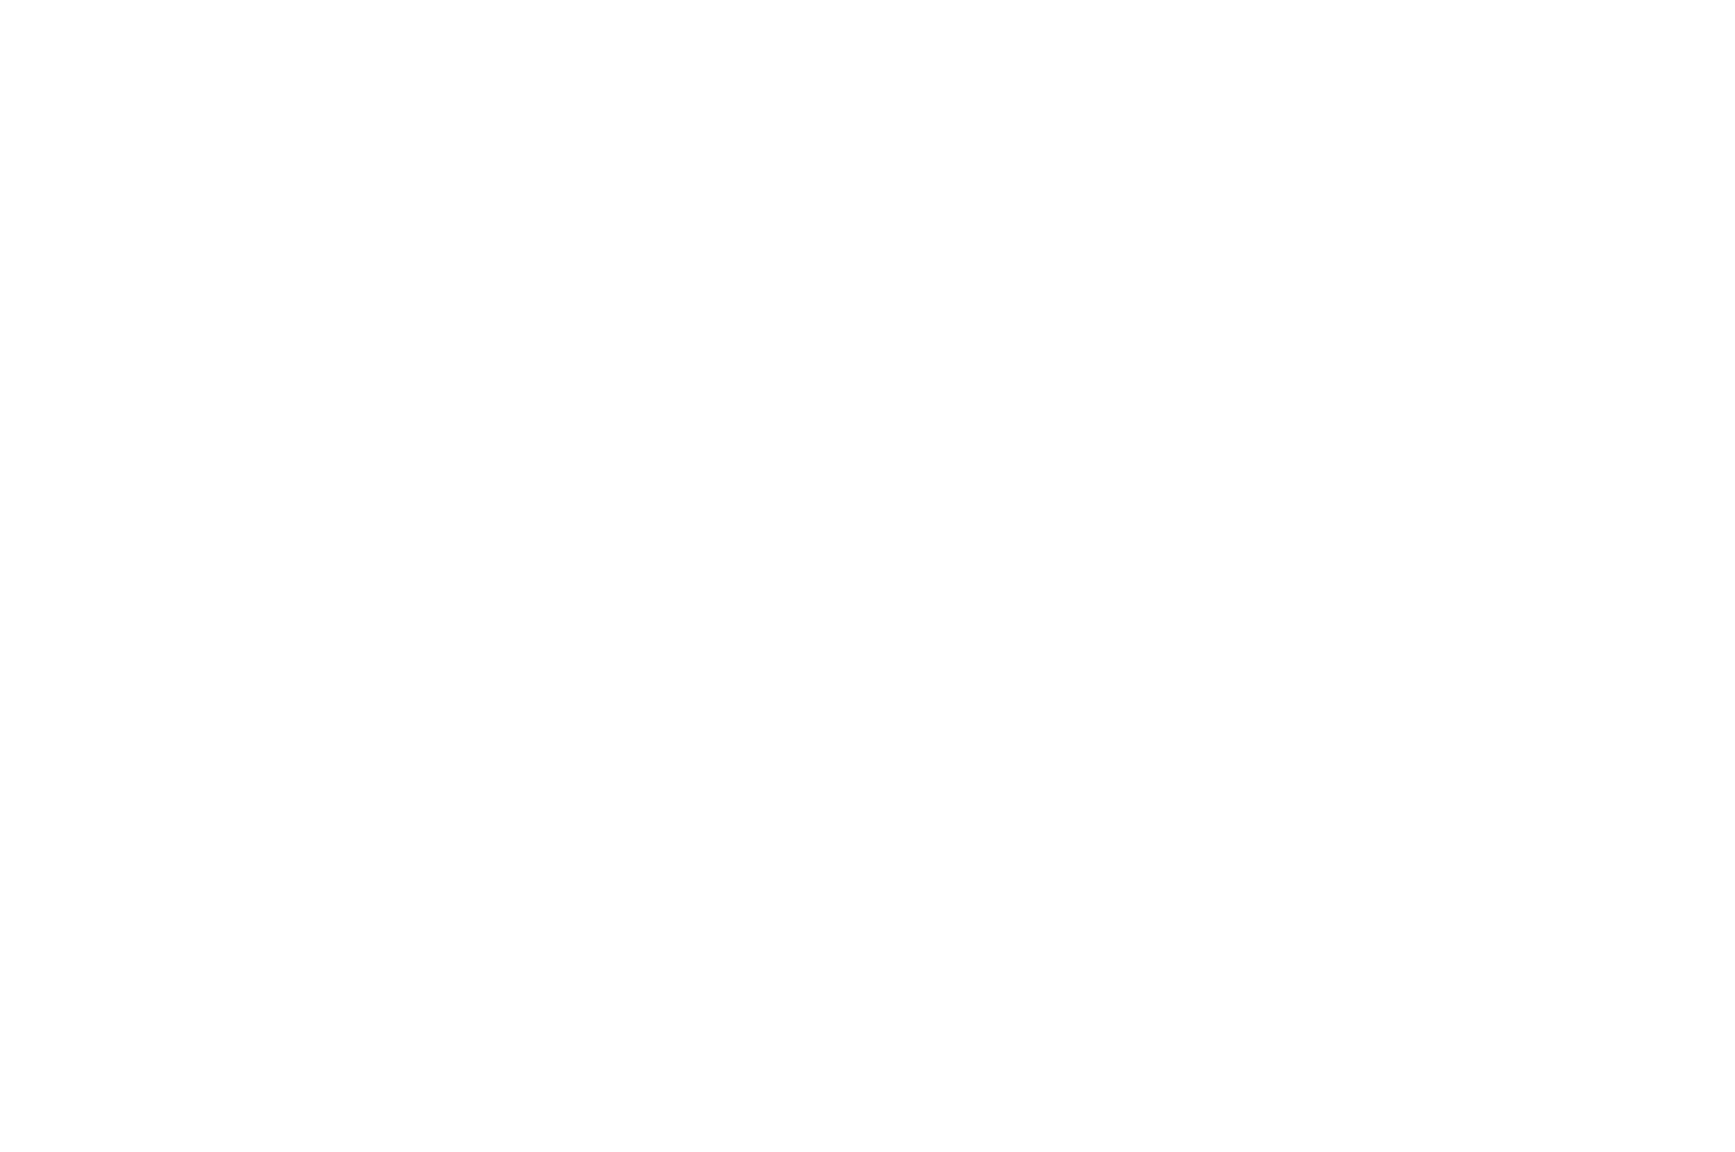 BEST ORIGINAL SONG - Global Film Festival Awards Los Angeles - 2022